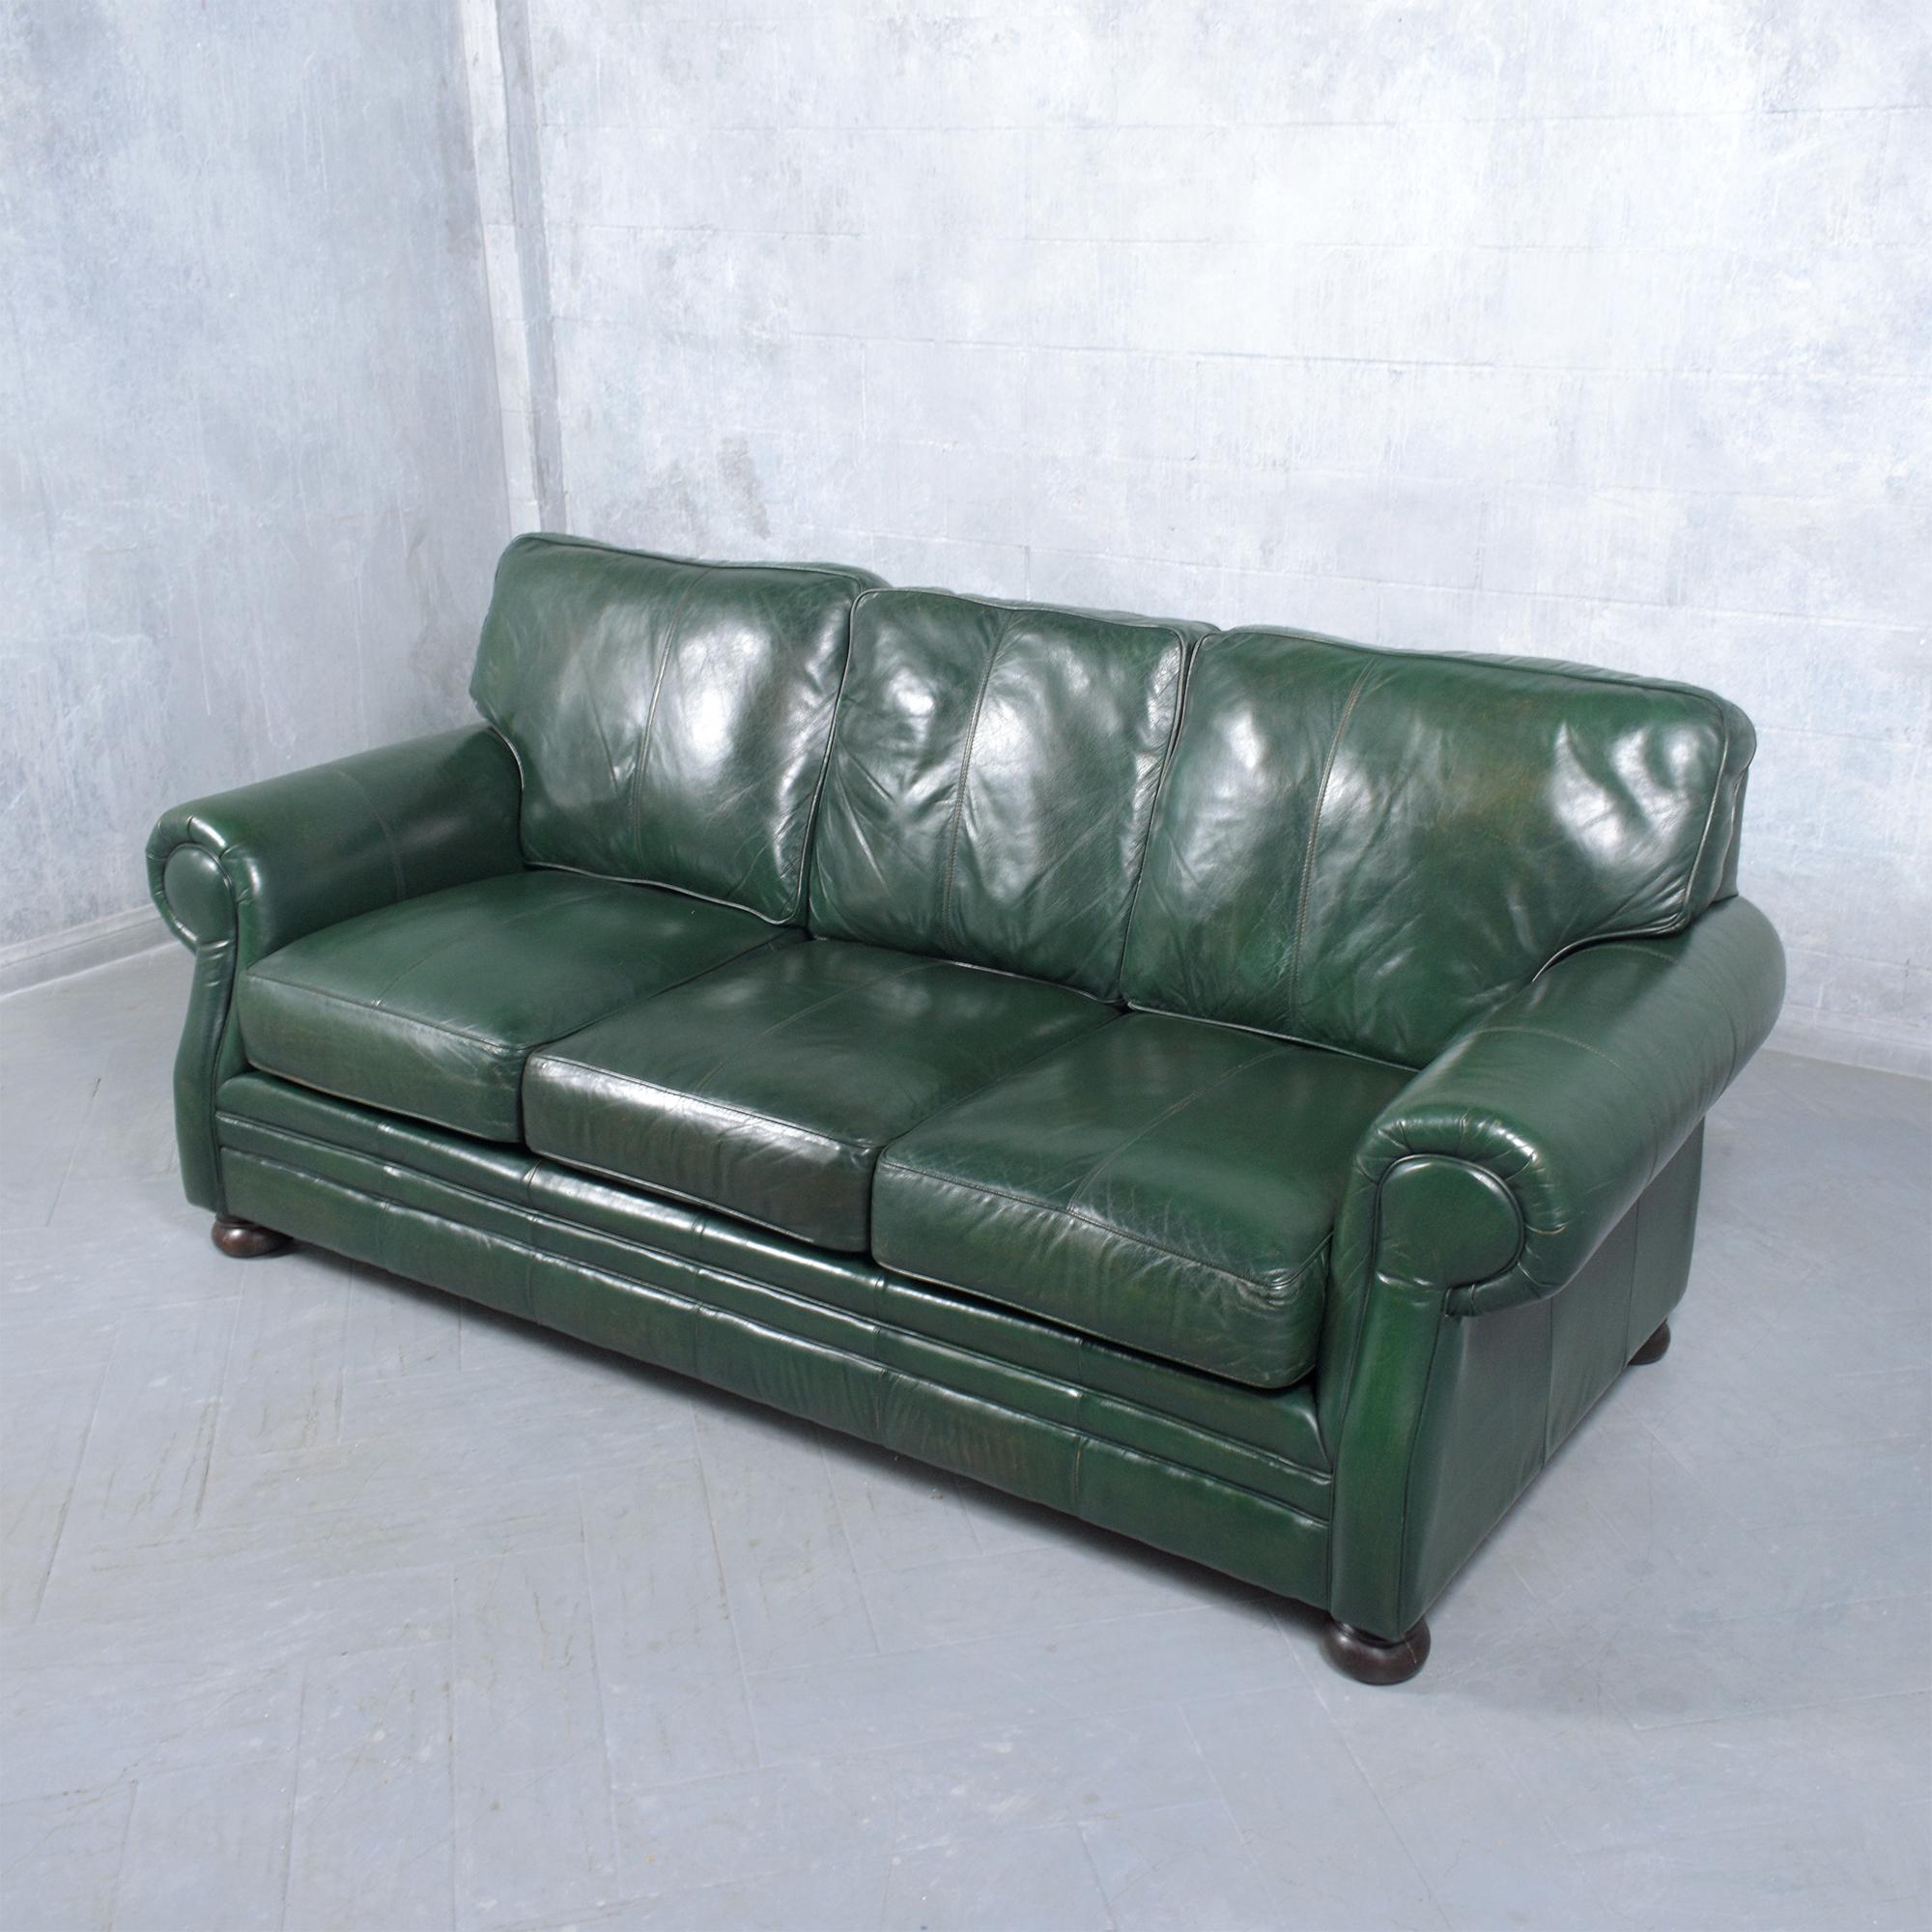 Elegant 1980s Restored Leather Sofa: A Blend of Vintage and Modern For Sale 3